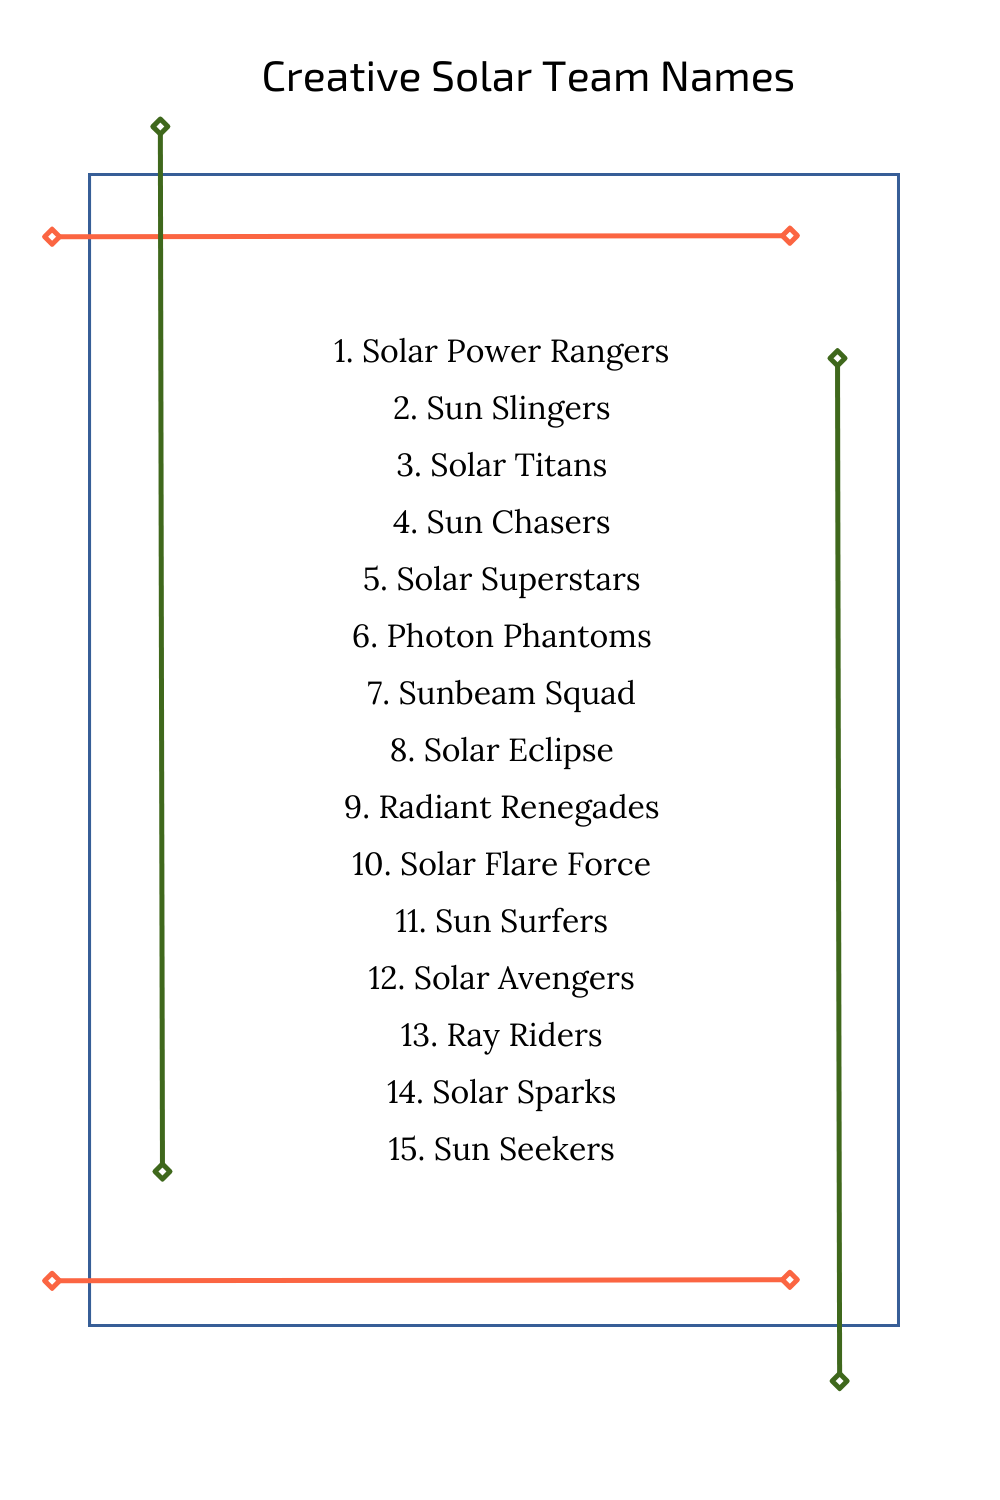 Creative Solar Team Names